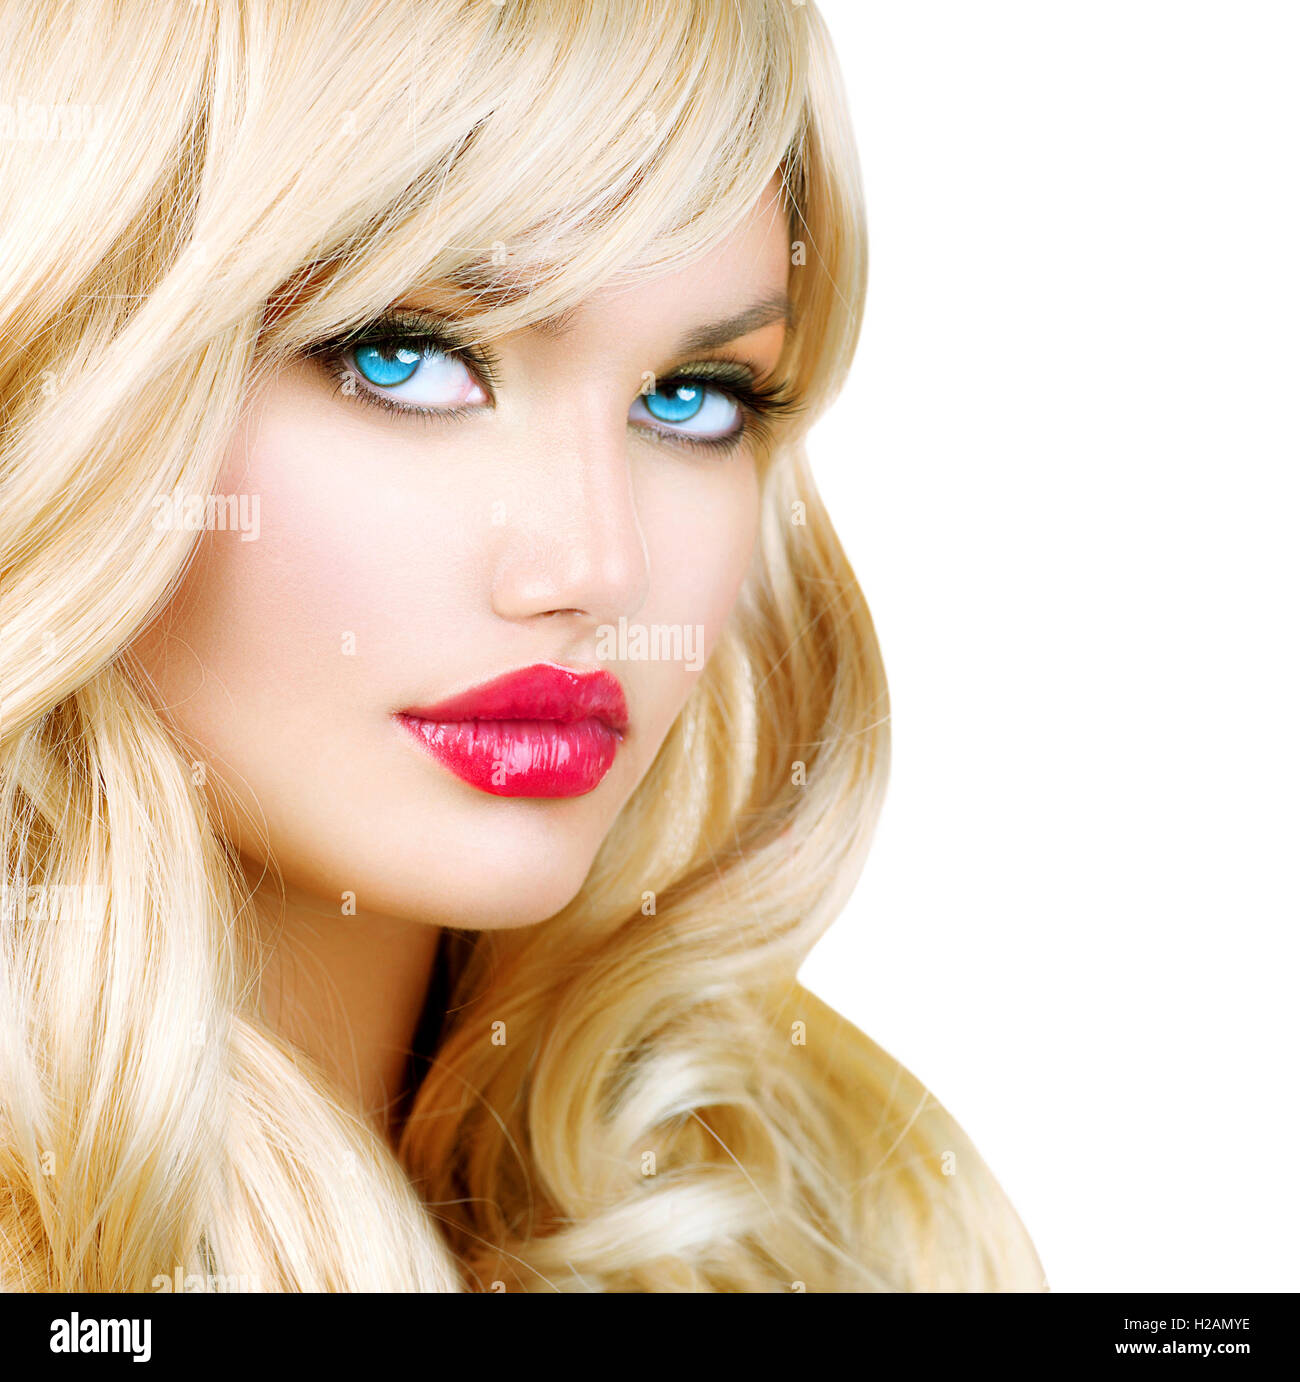 https://c8.alamy.com/comp/H2AMYE/blonde-woman-portrait-beautiful-blond-girl-with-long-wavy-hair-H2AMYE.jpg